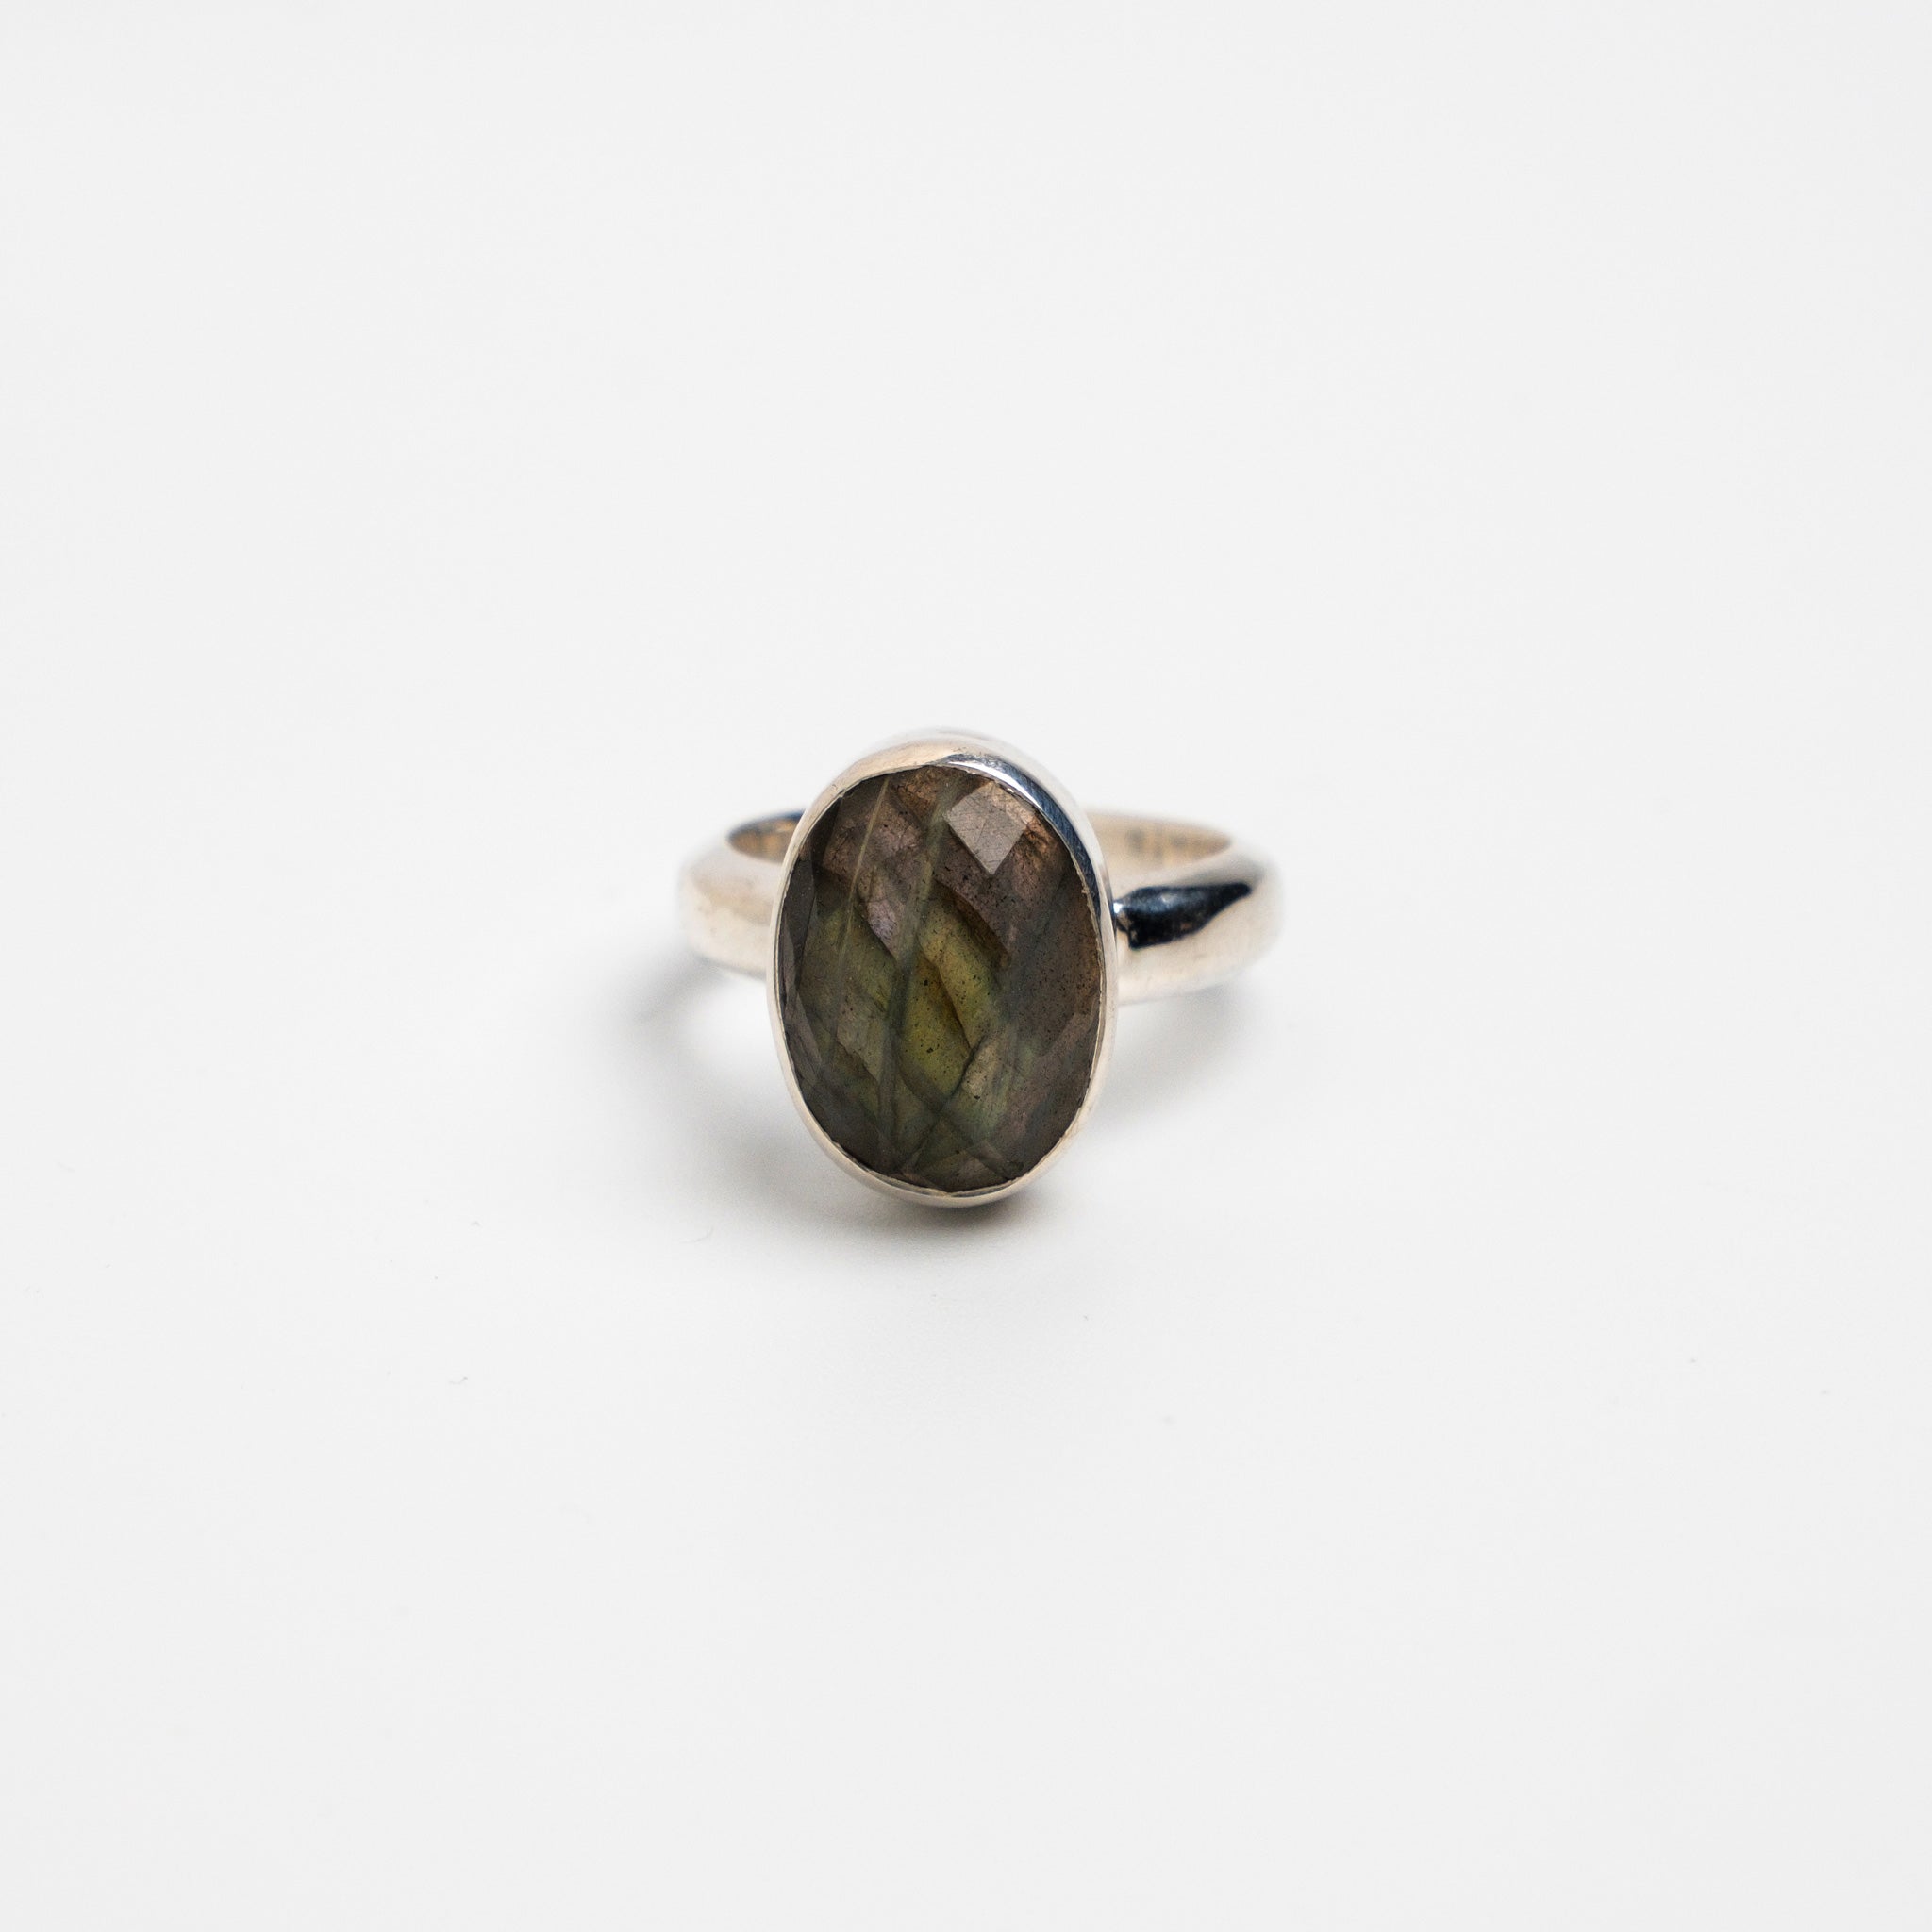 Silver 925 x natural stone rings (oval) / Samira